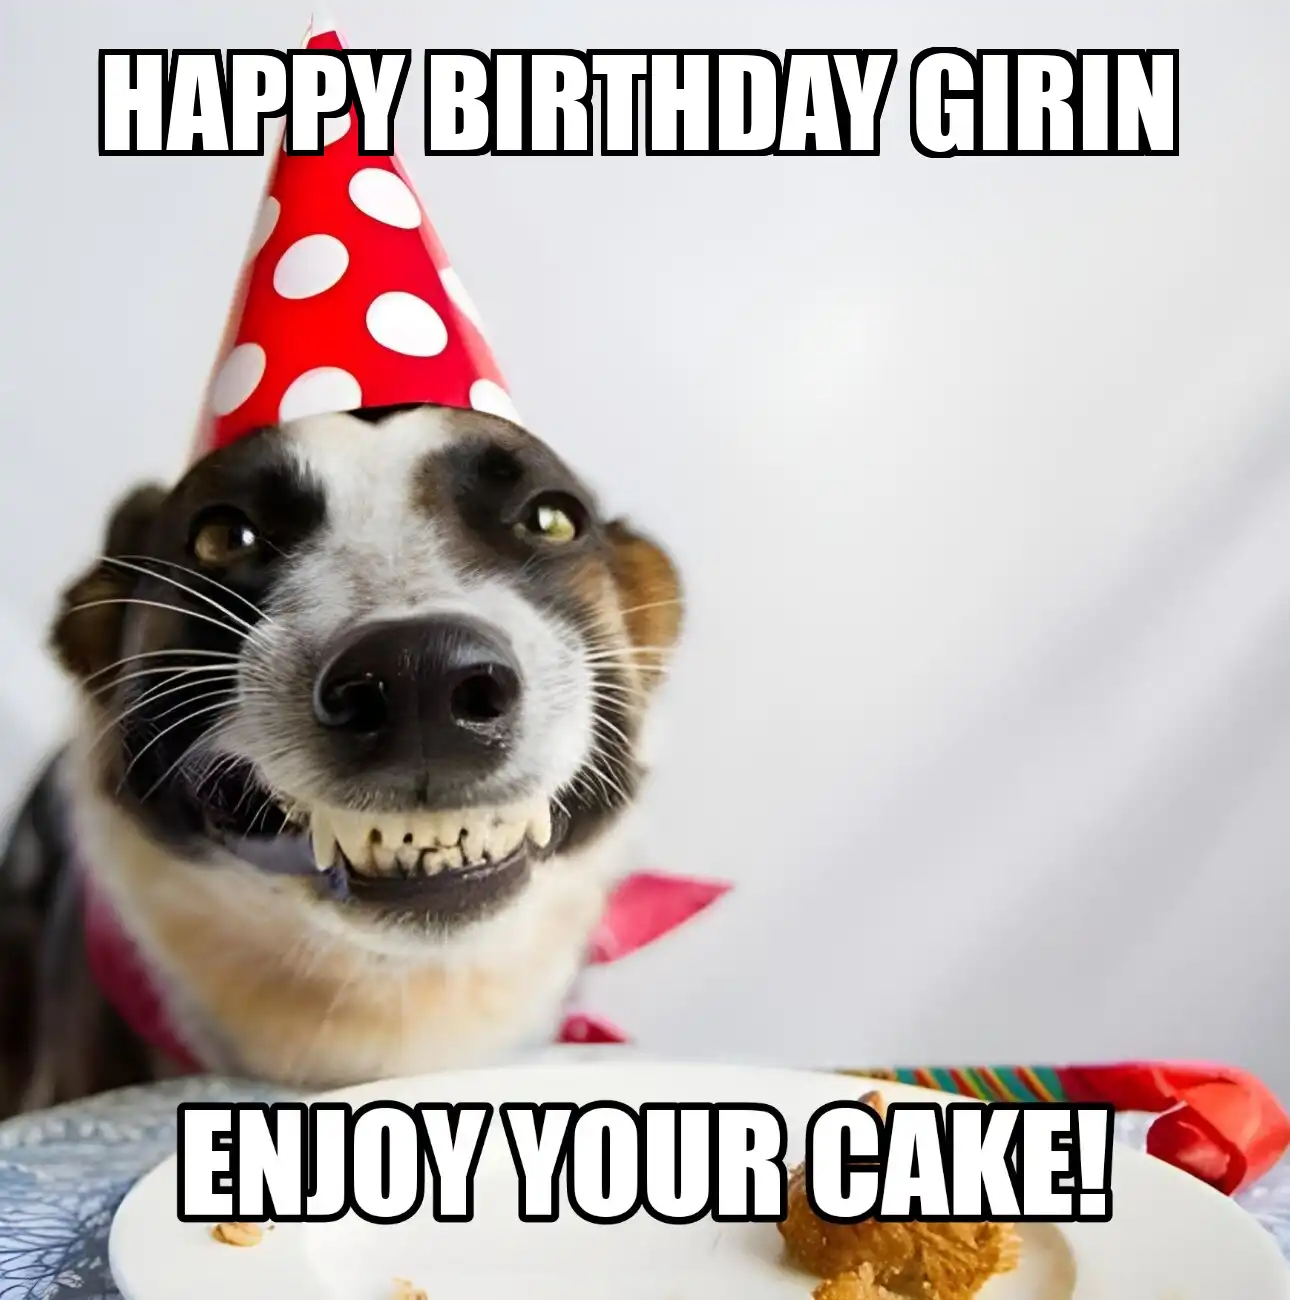 Happy Birthday Girin Enjoy Your Cake Dog Meme